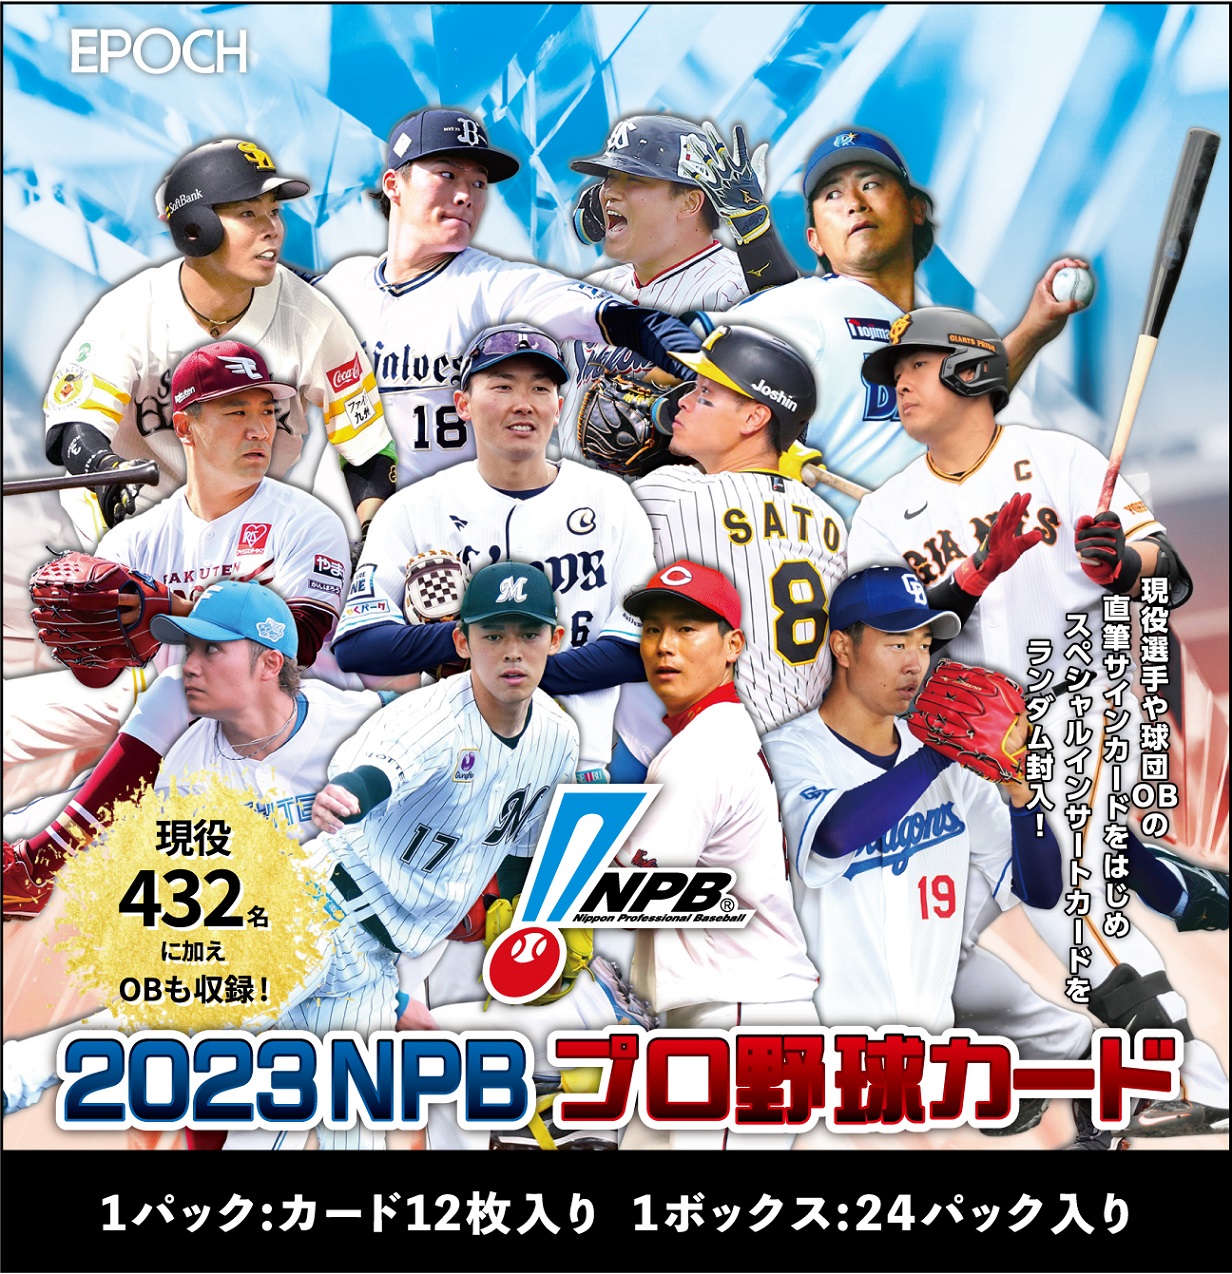 ⚾ EPOCH 2023 NPB プロ野球カード【製品情報】 | Trading Card Journal